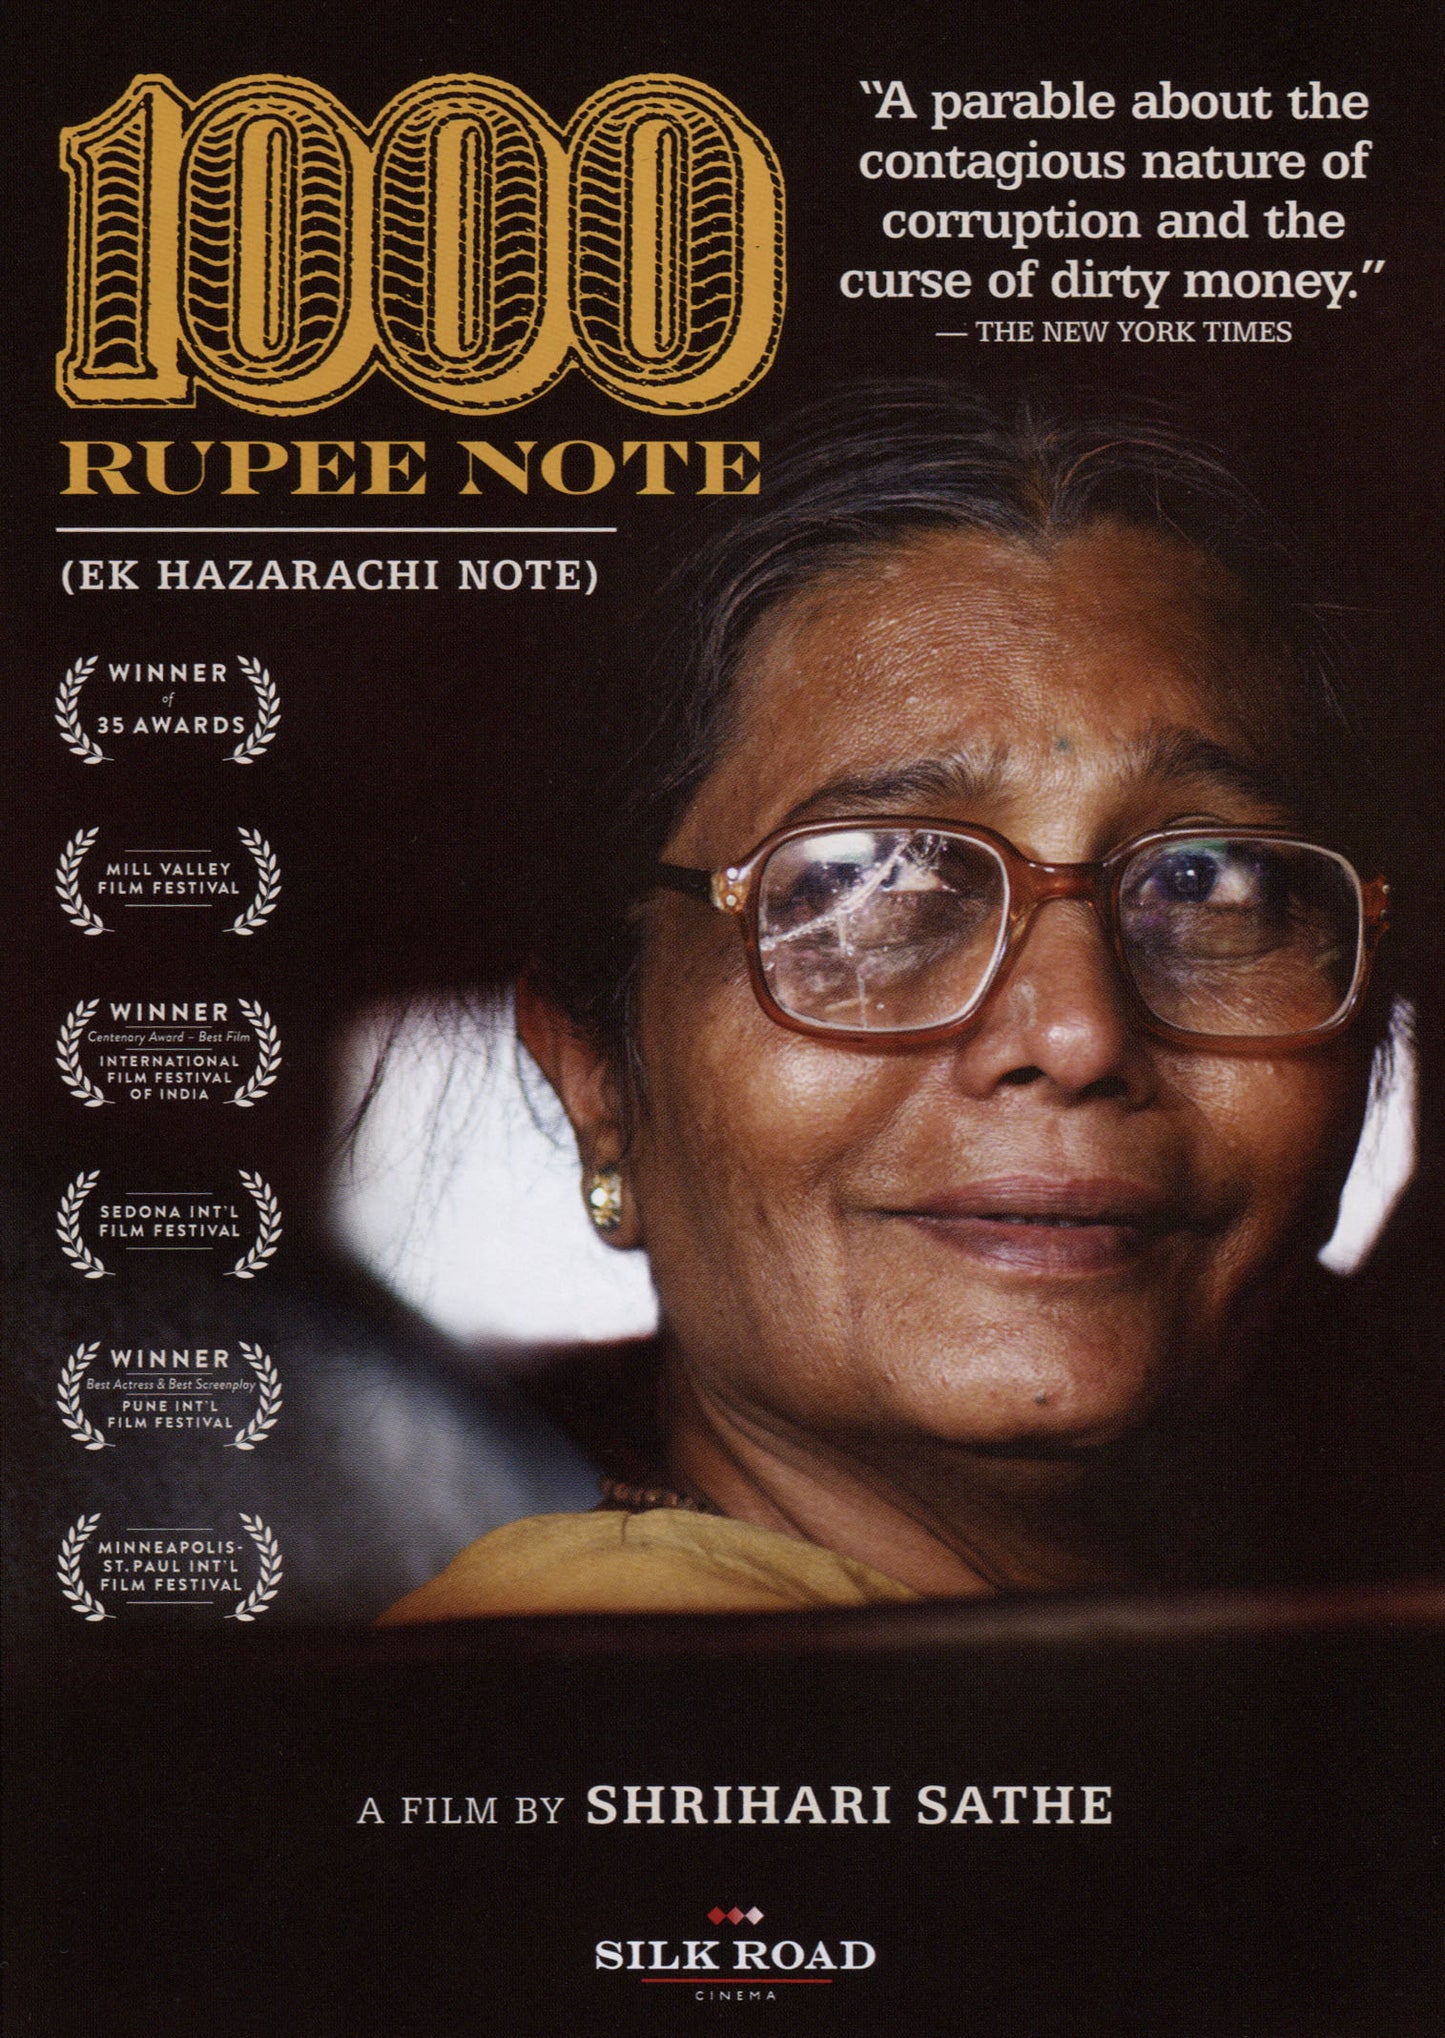 1000 Rupee Note cover art